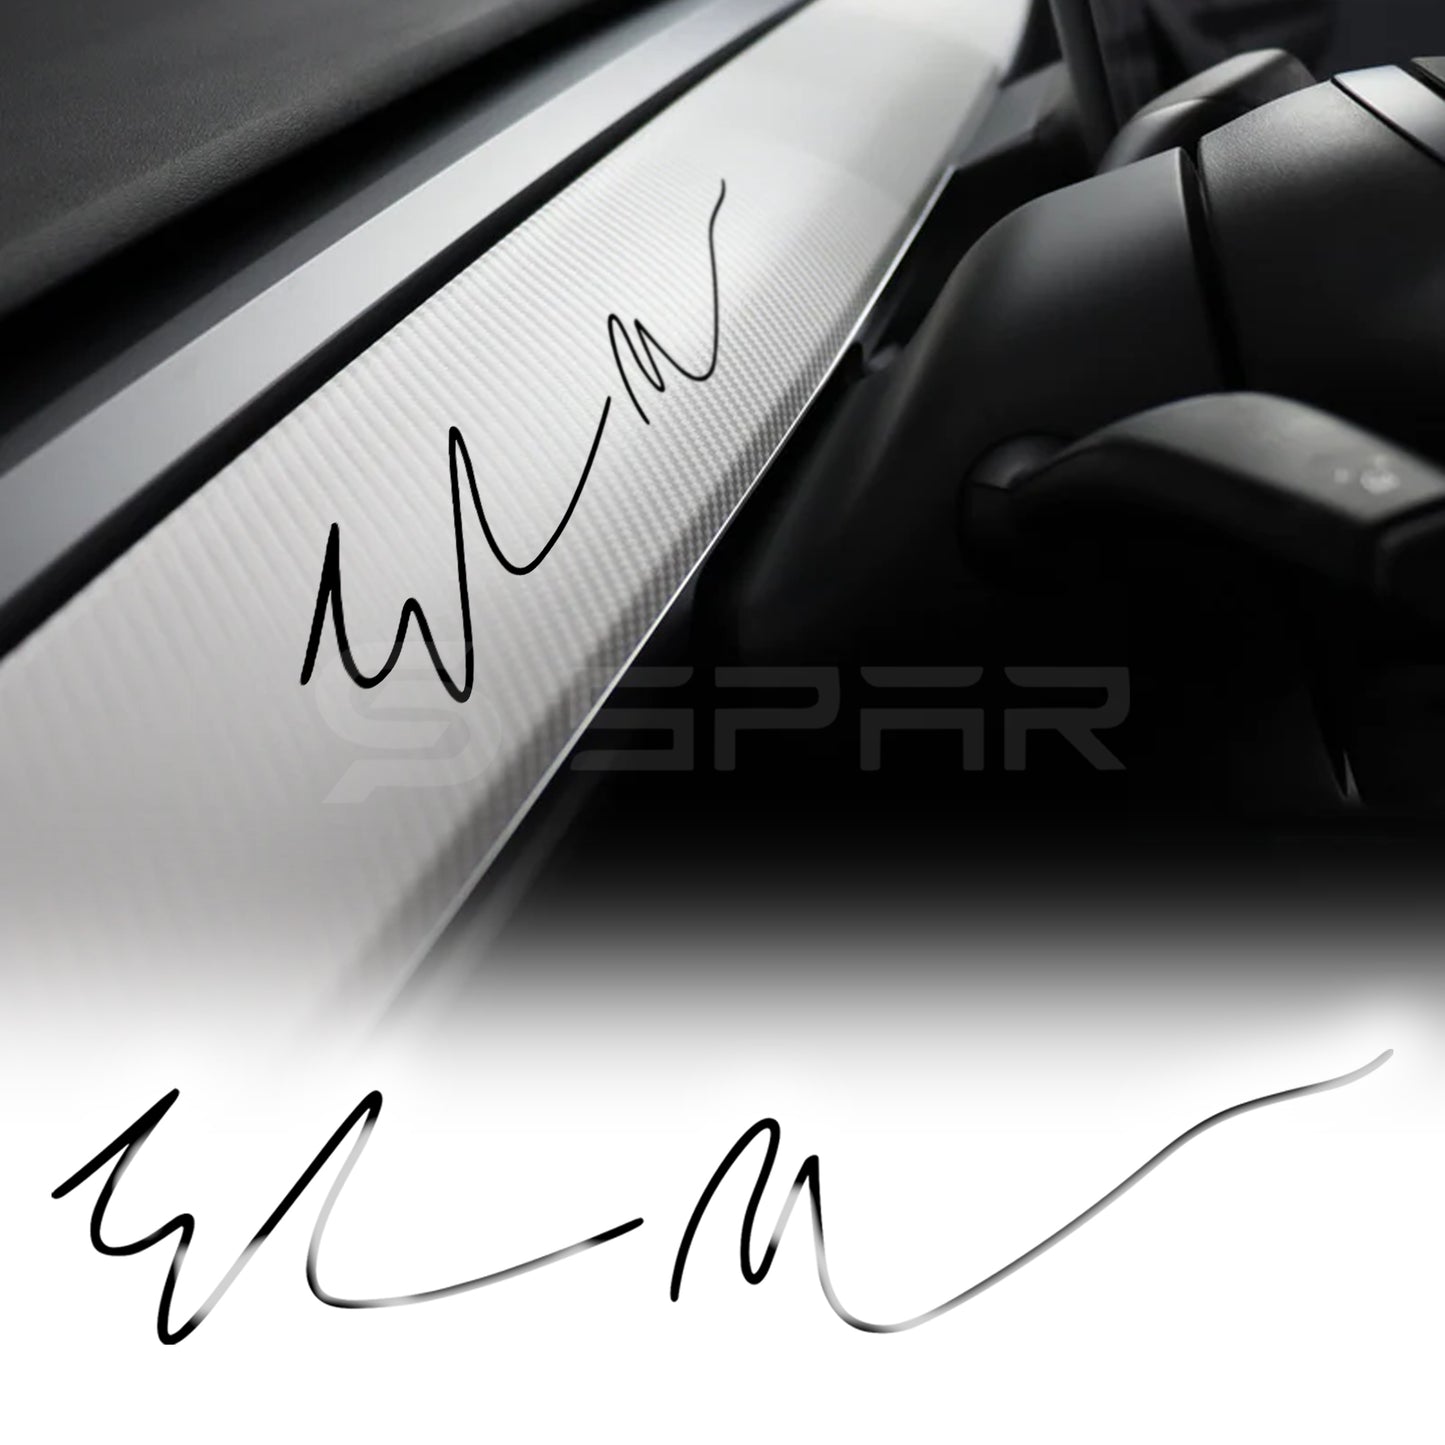 Metal Elon Musk Signature Sticker for Tesla Model S/3/X/Y